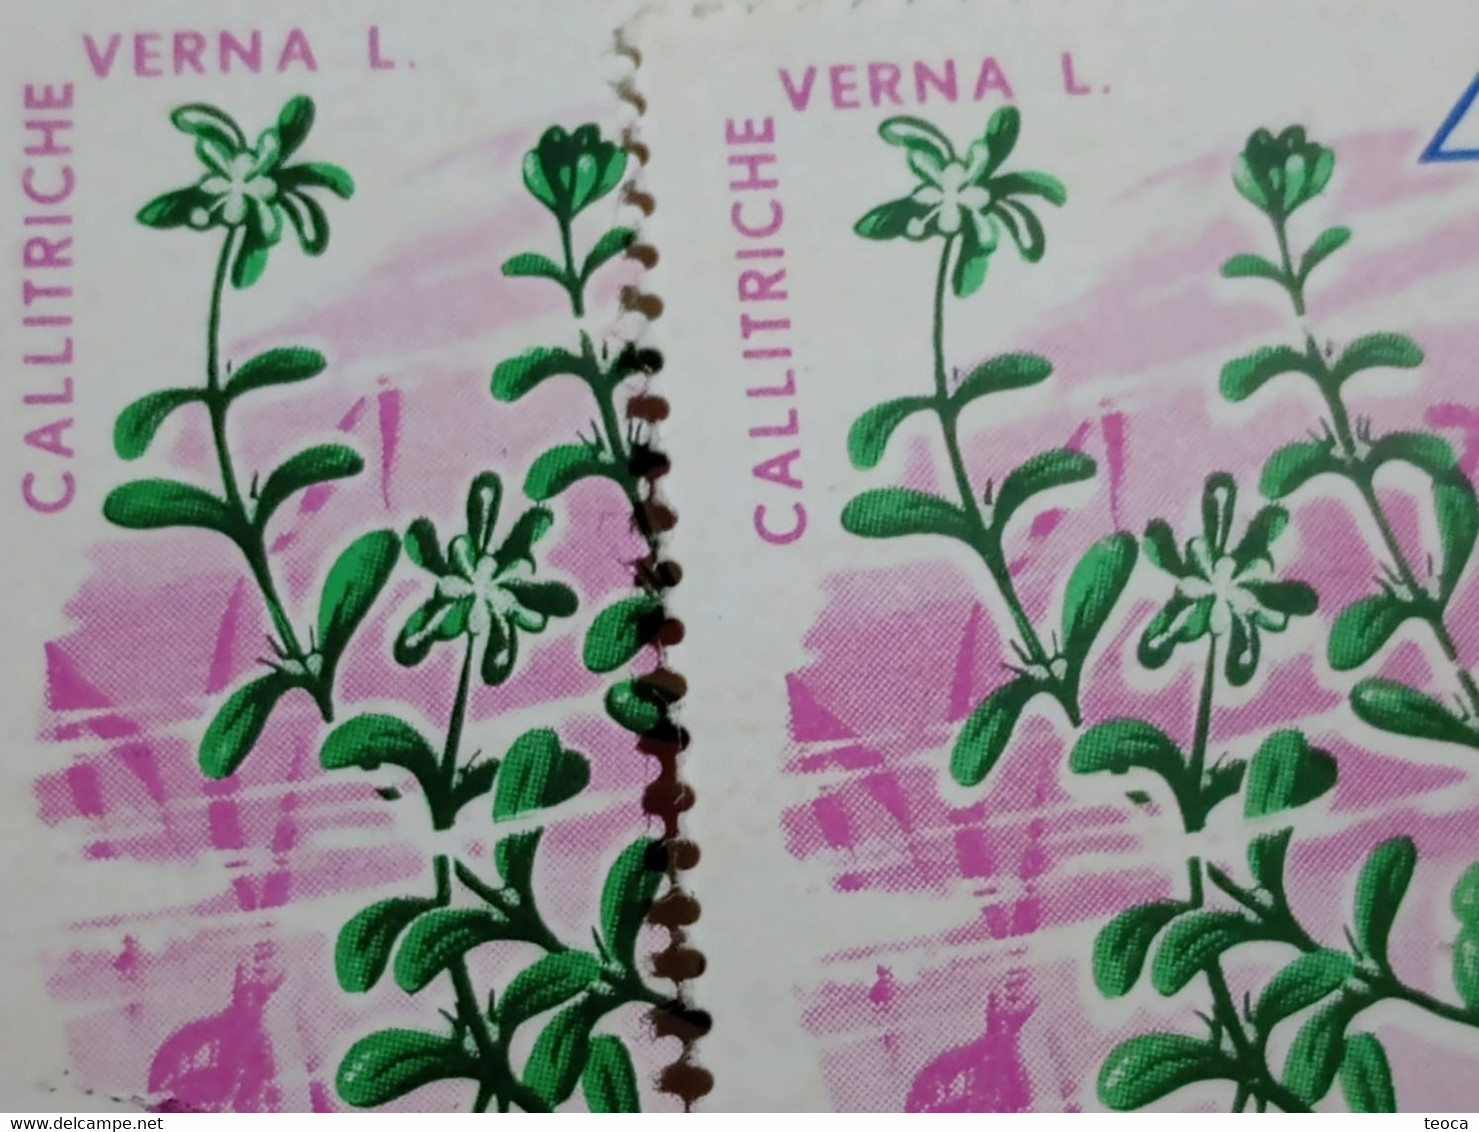 Stamps Errors Romania 1966 # Mi 2528 Printed With Misplaced Plants Flower Image Used - Abarten Und Kuriositäten